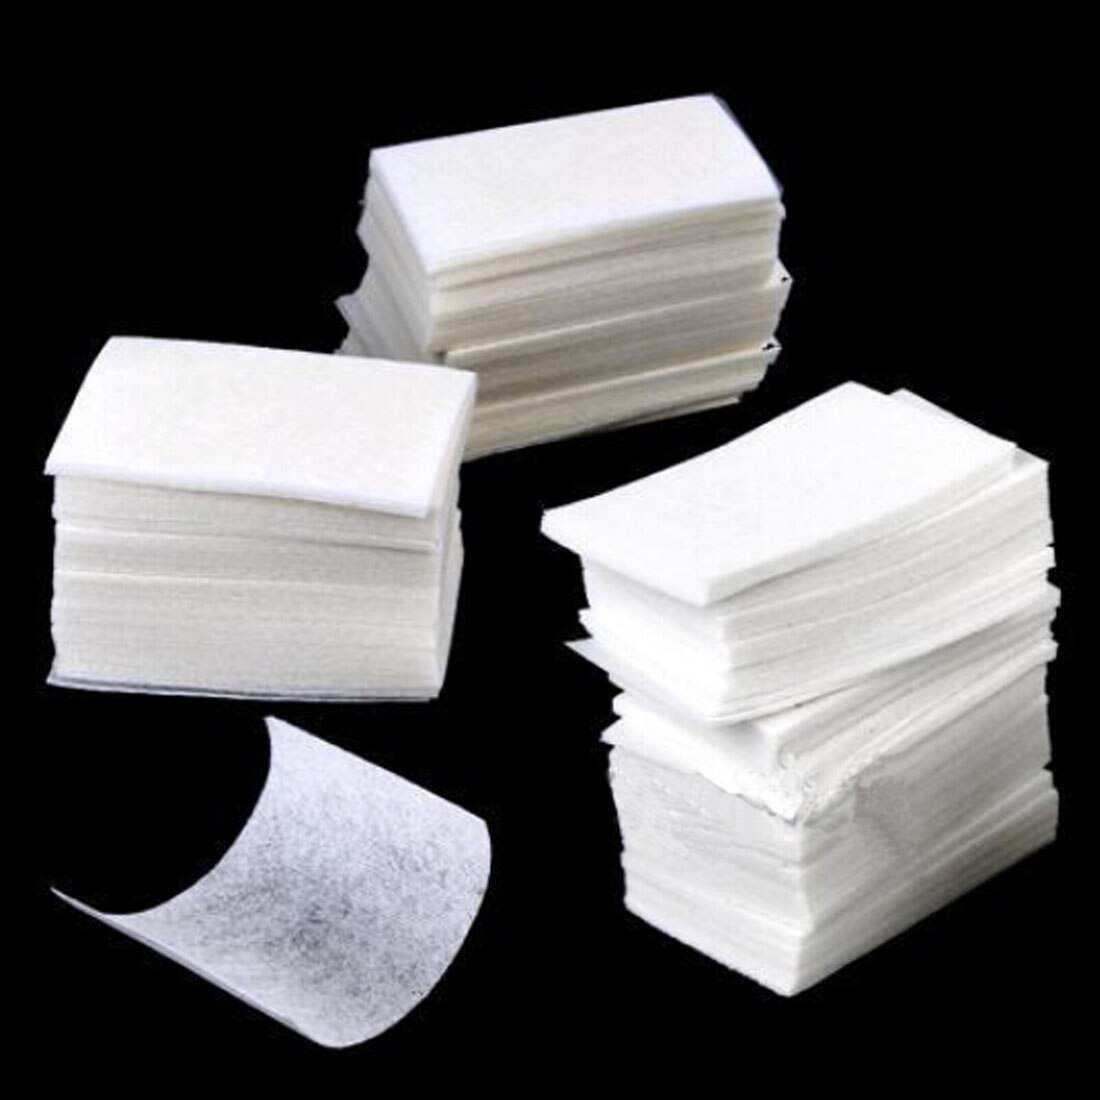 400 Stks/set Nail Art Veeg Manicure Polish Gel Nail Wipes Cotton Lint Katoen Pads Papier Acryl Gel Tips Nail Art cleaner Remover